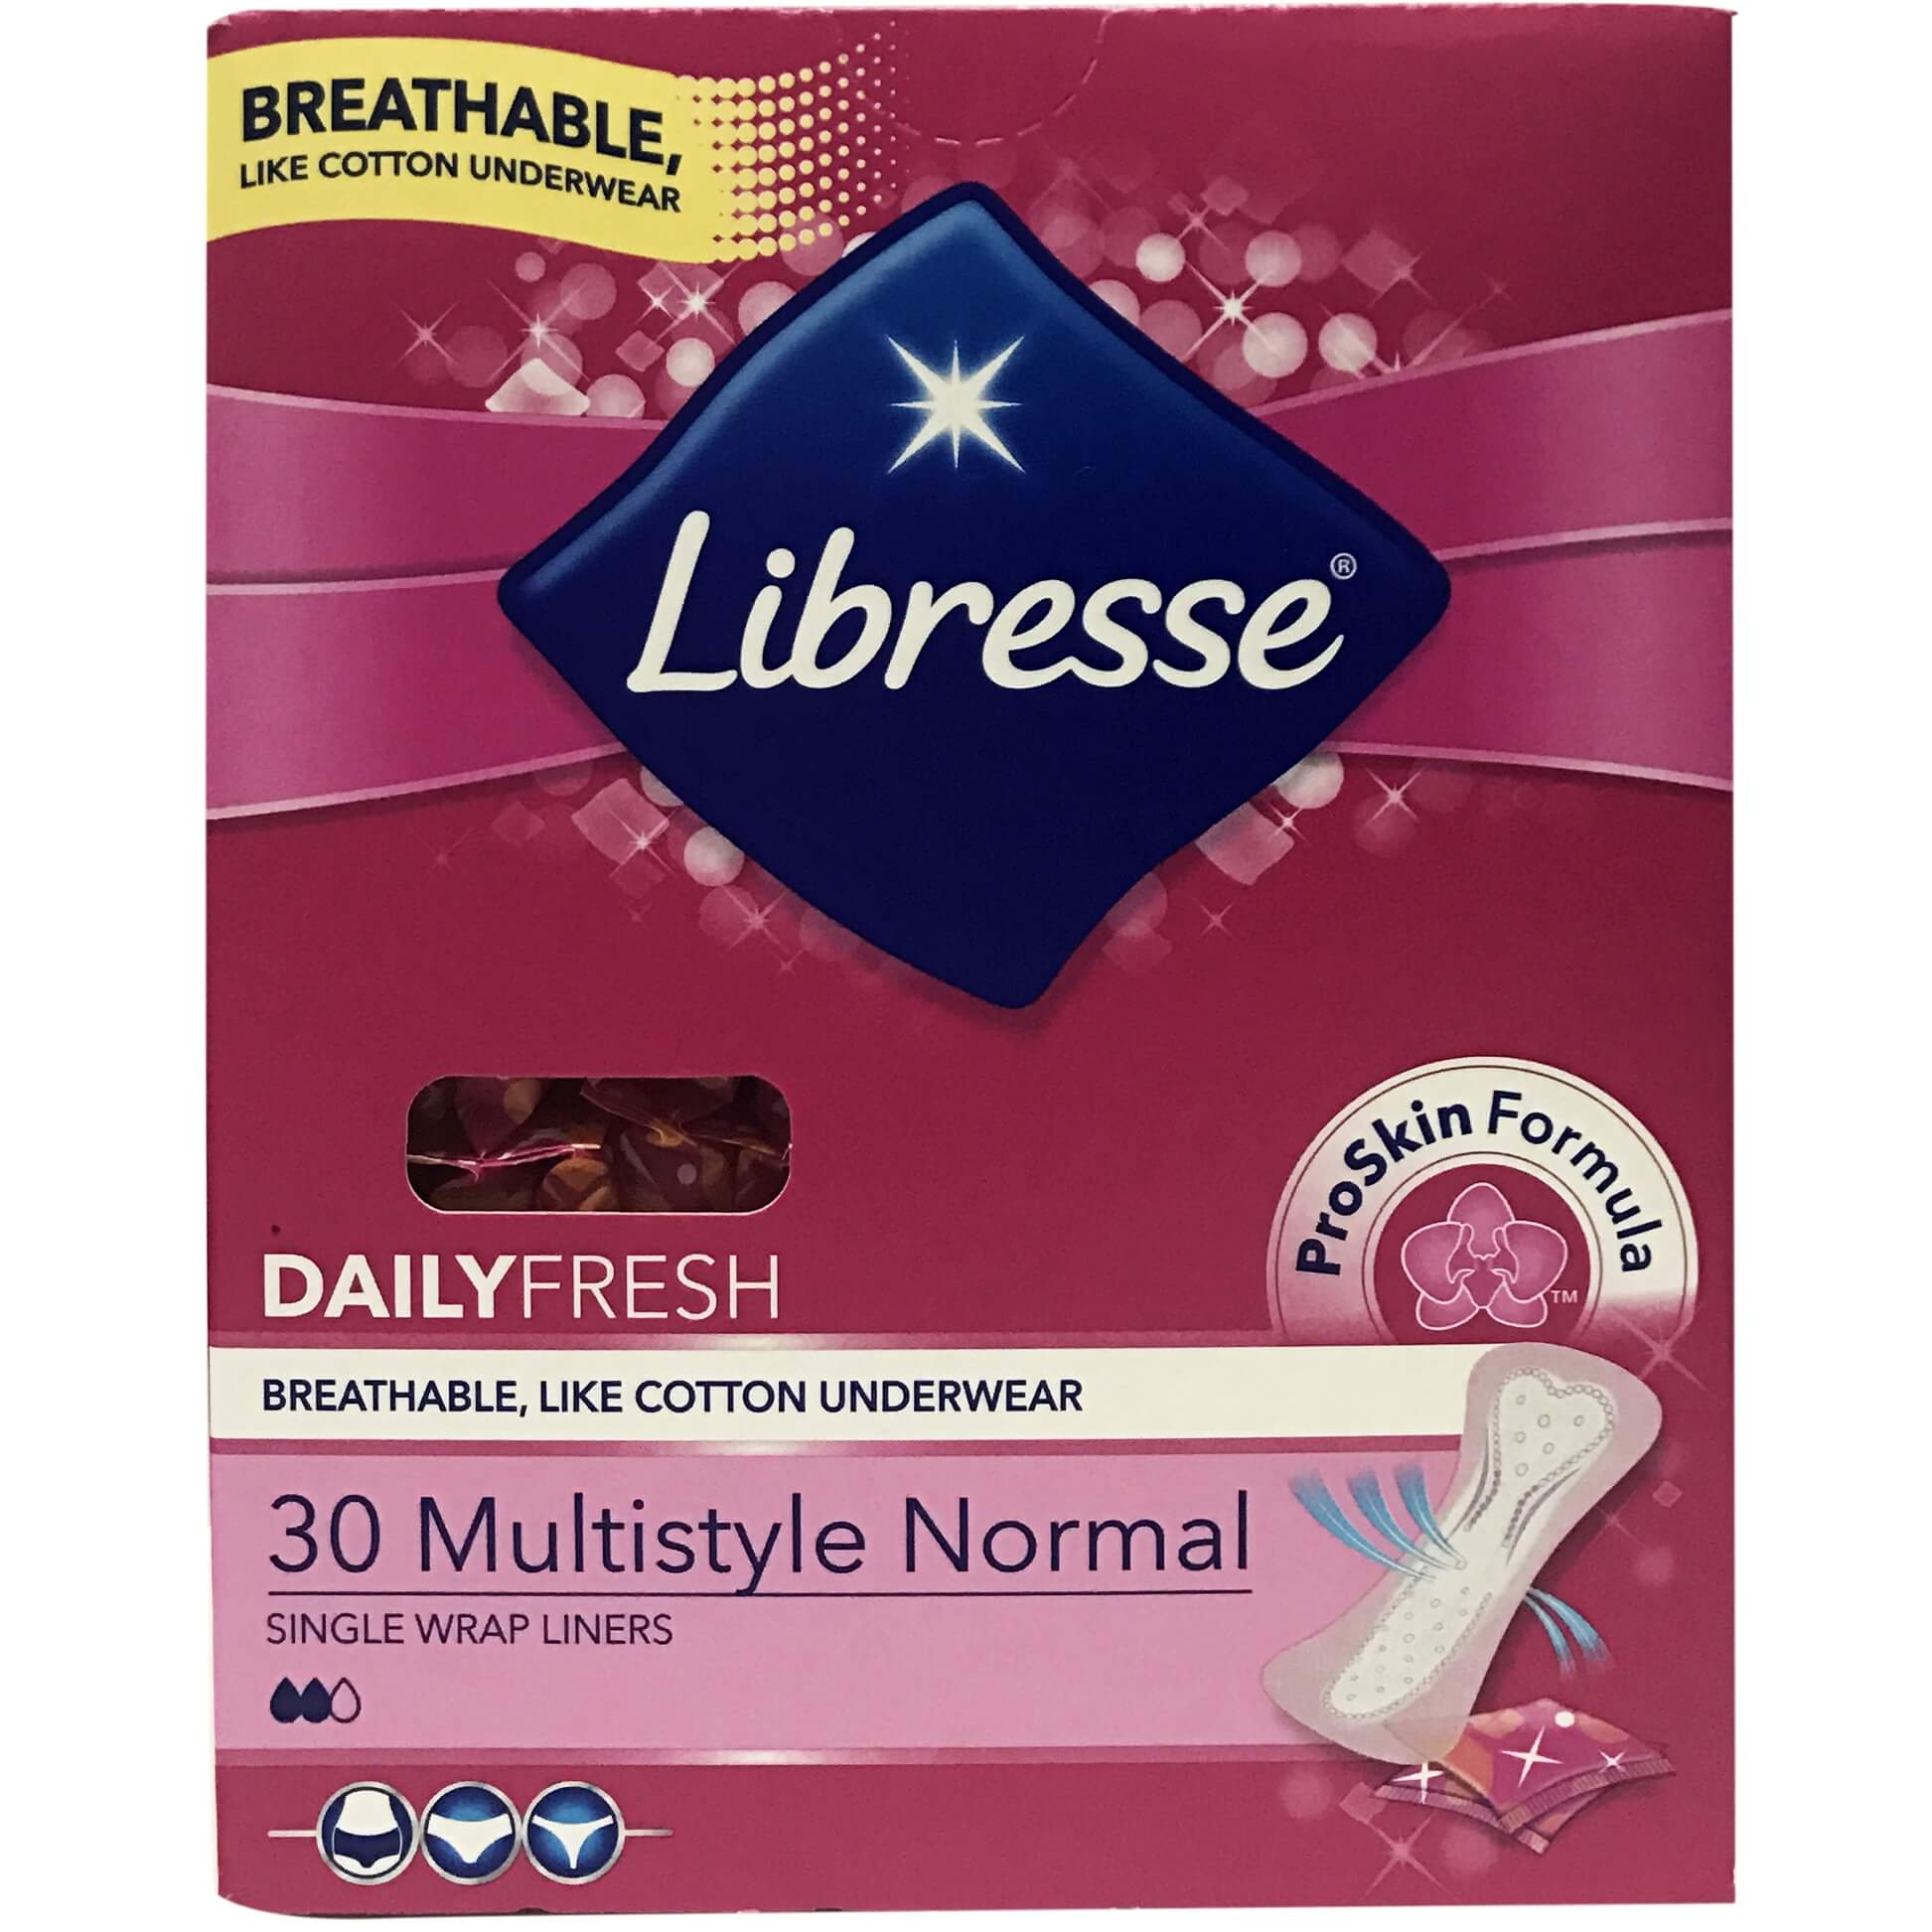 Libresse Daily Fresh Multistyle Normal Σερβιέτες 30 Τεμάχια